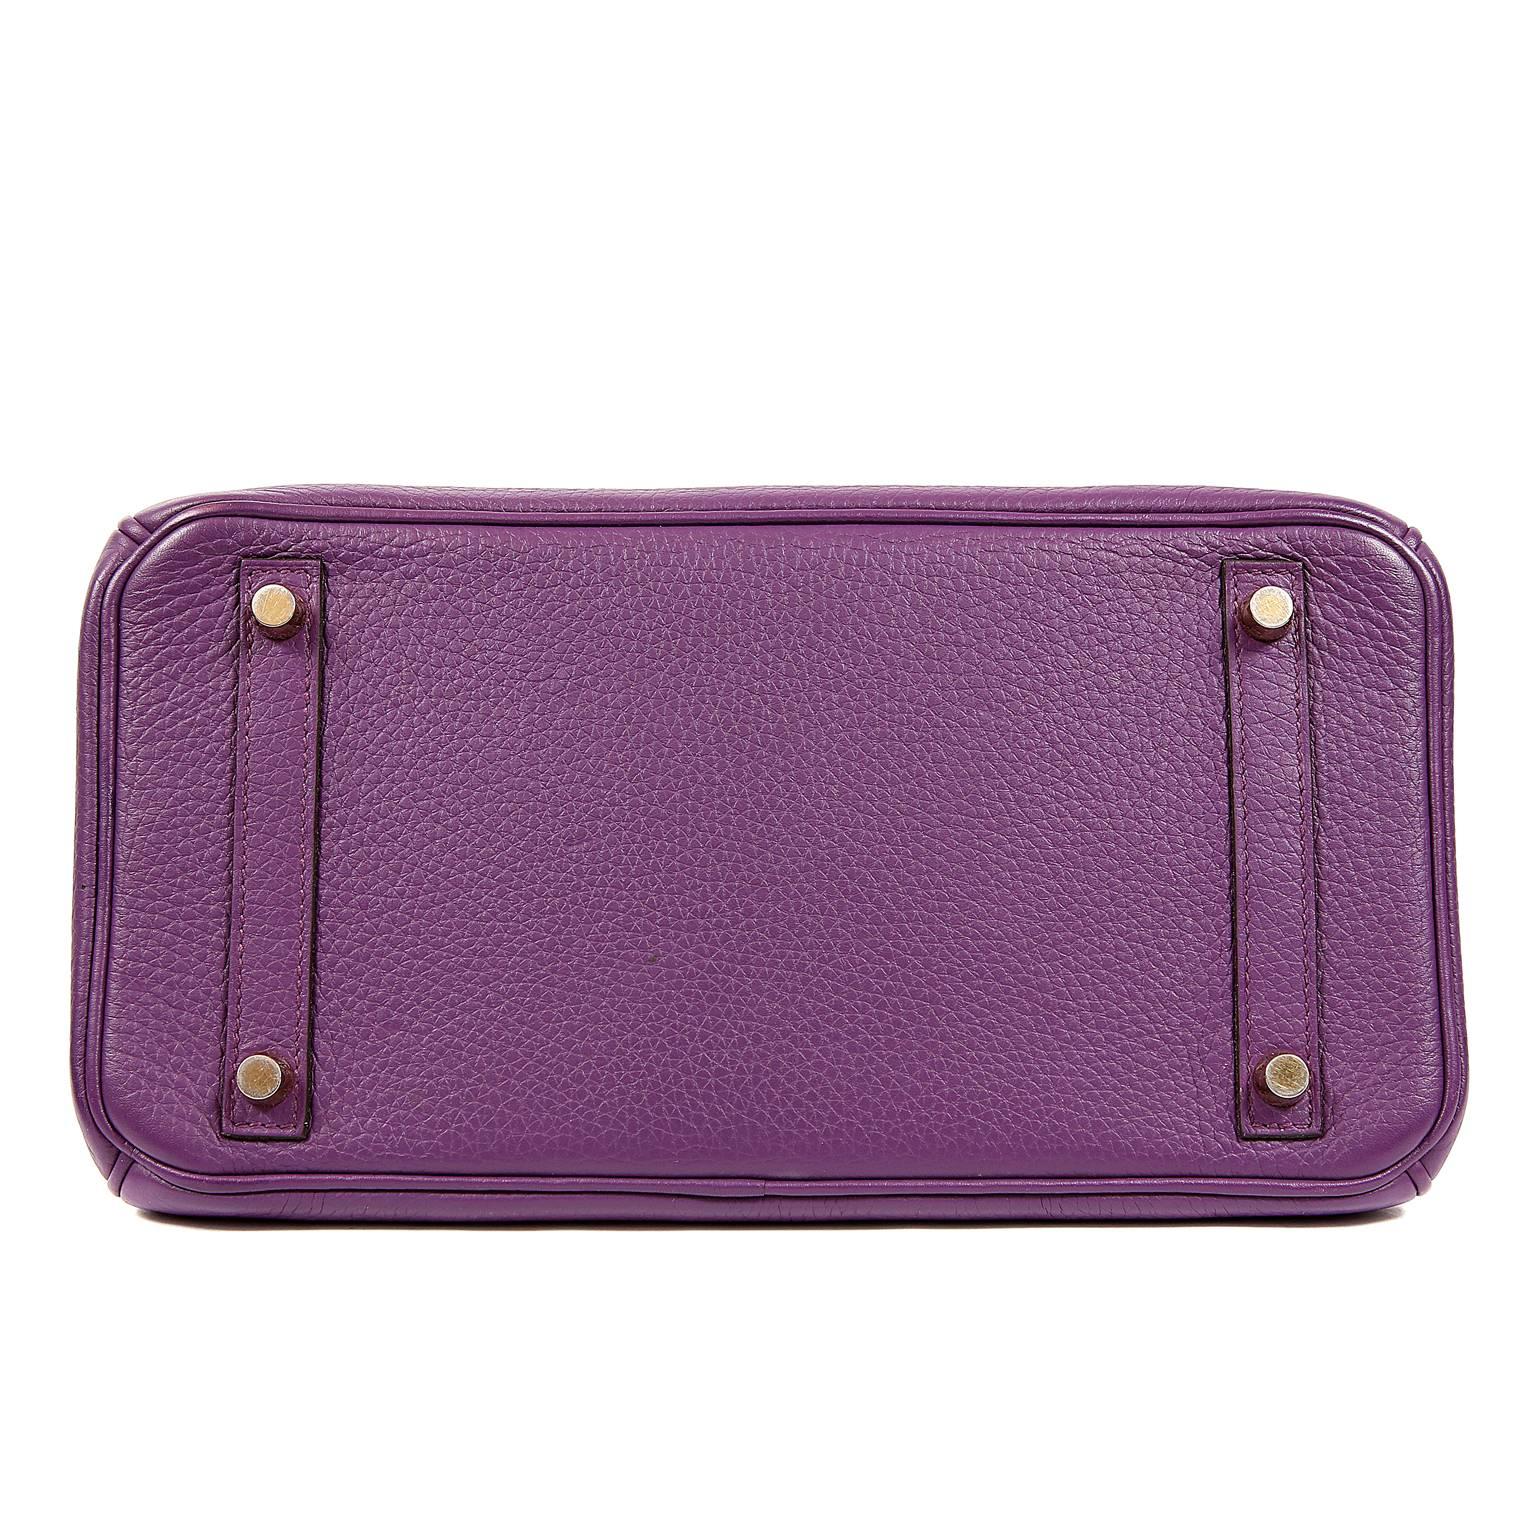 Hermes Ultra Violet Togo 30 cm Birkin Bag with GHW In Excellent Condition For Sale In Malibu, CA